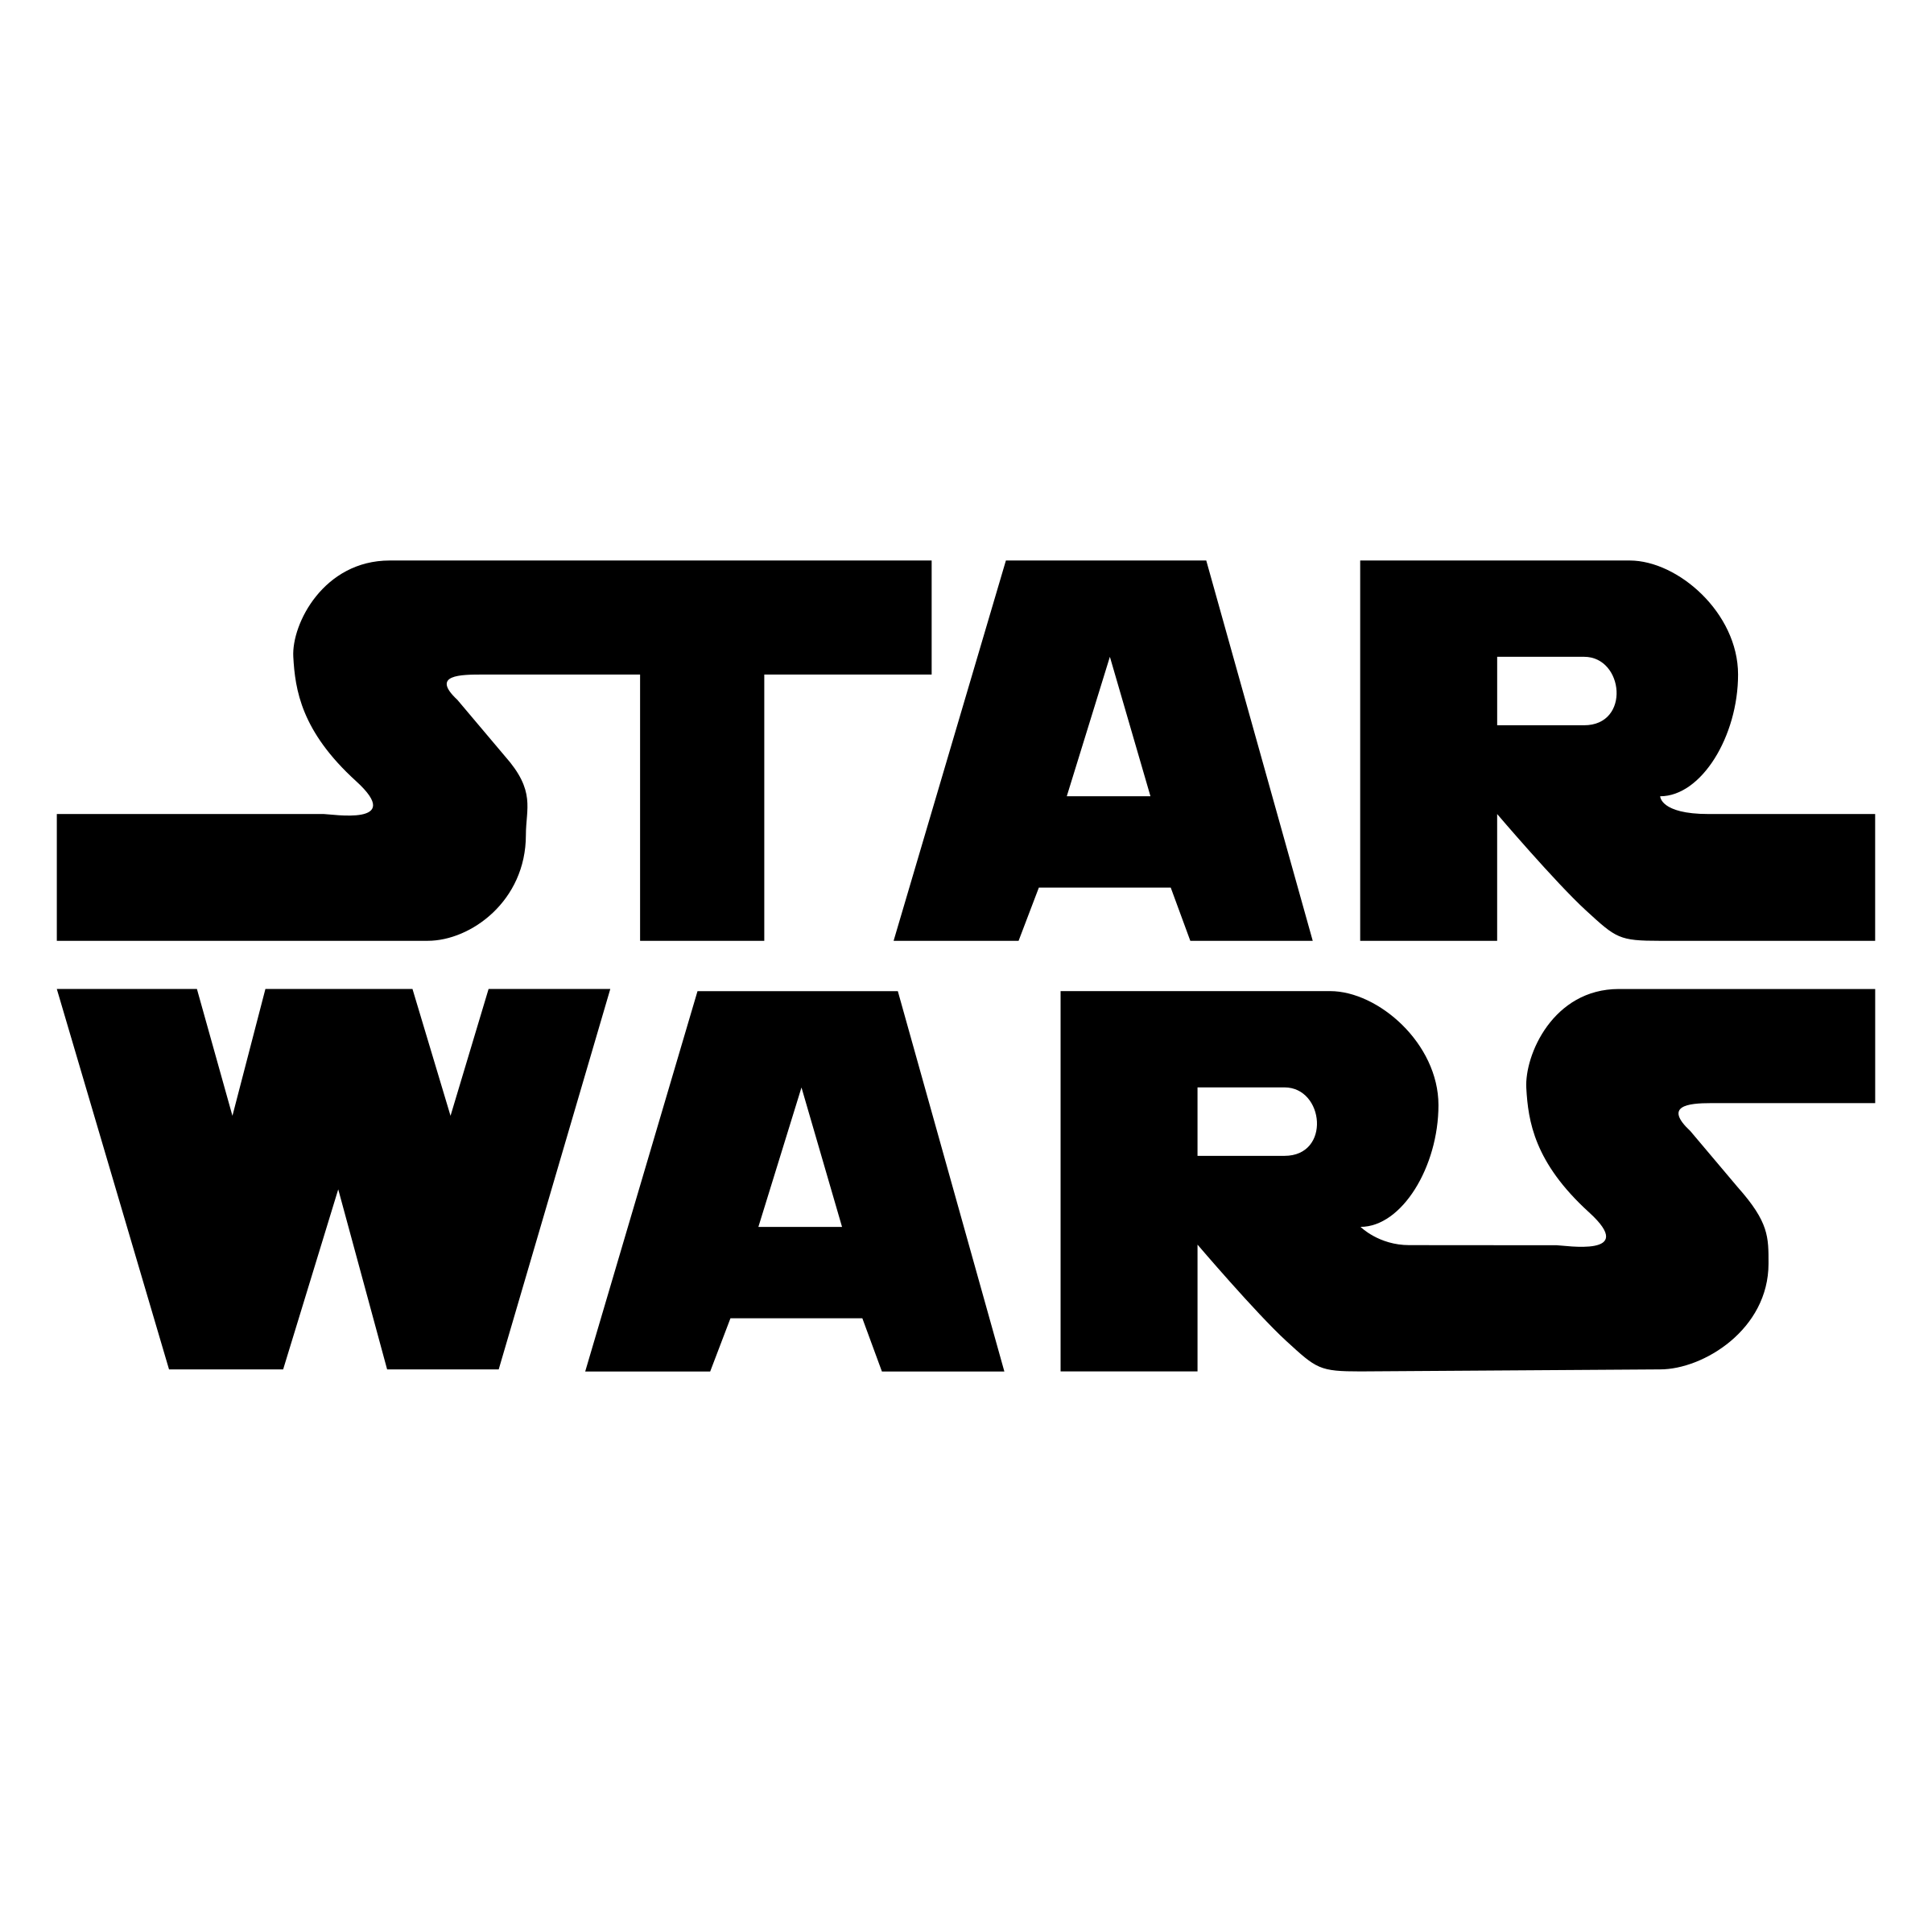 Star Wars Black and White Logo - Star Wars Logo PNG Transparent & SVG Vector - Freebie Supply